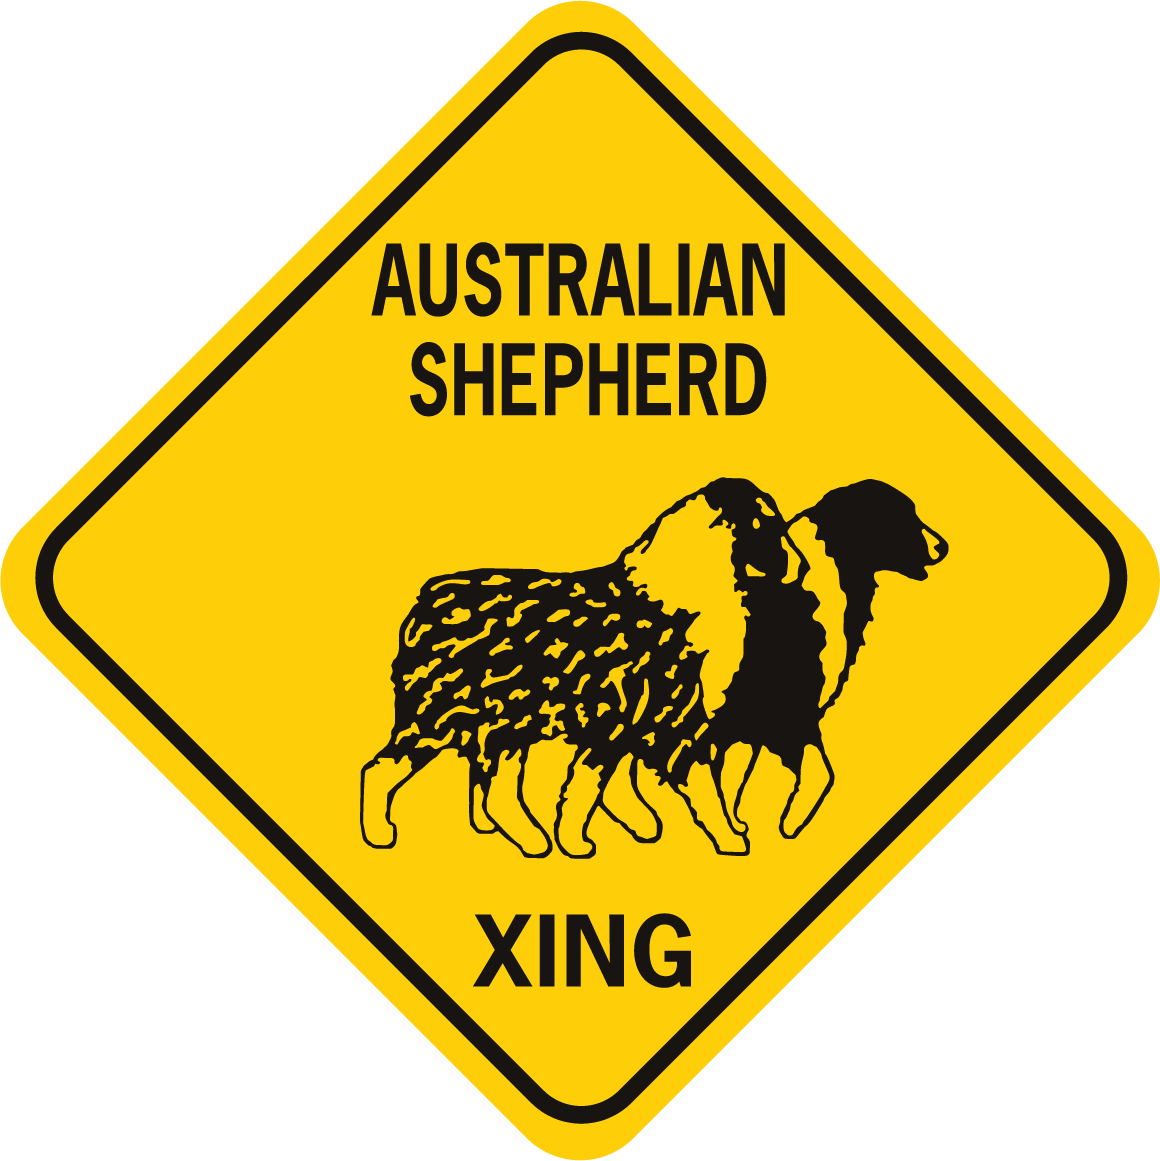 Australian Shepherd Dog Crossing Xing Sign New Made in USA 